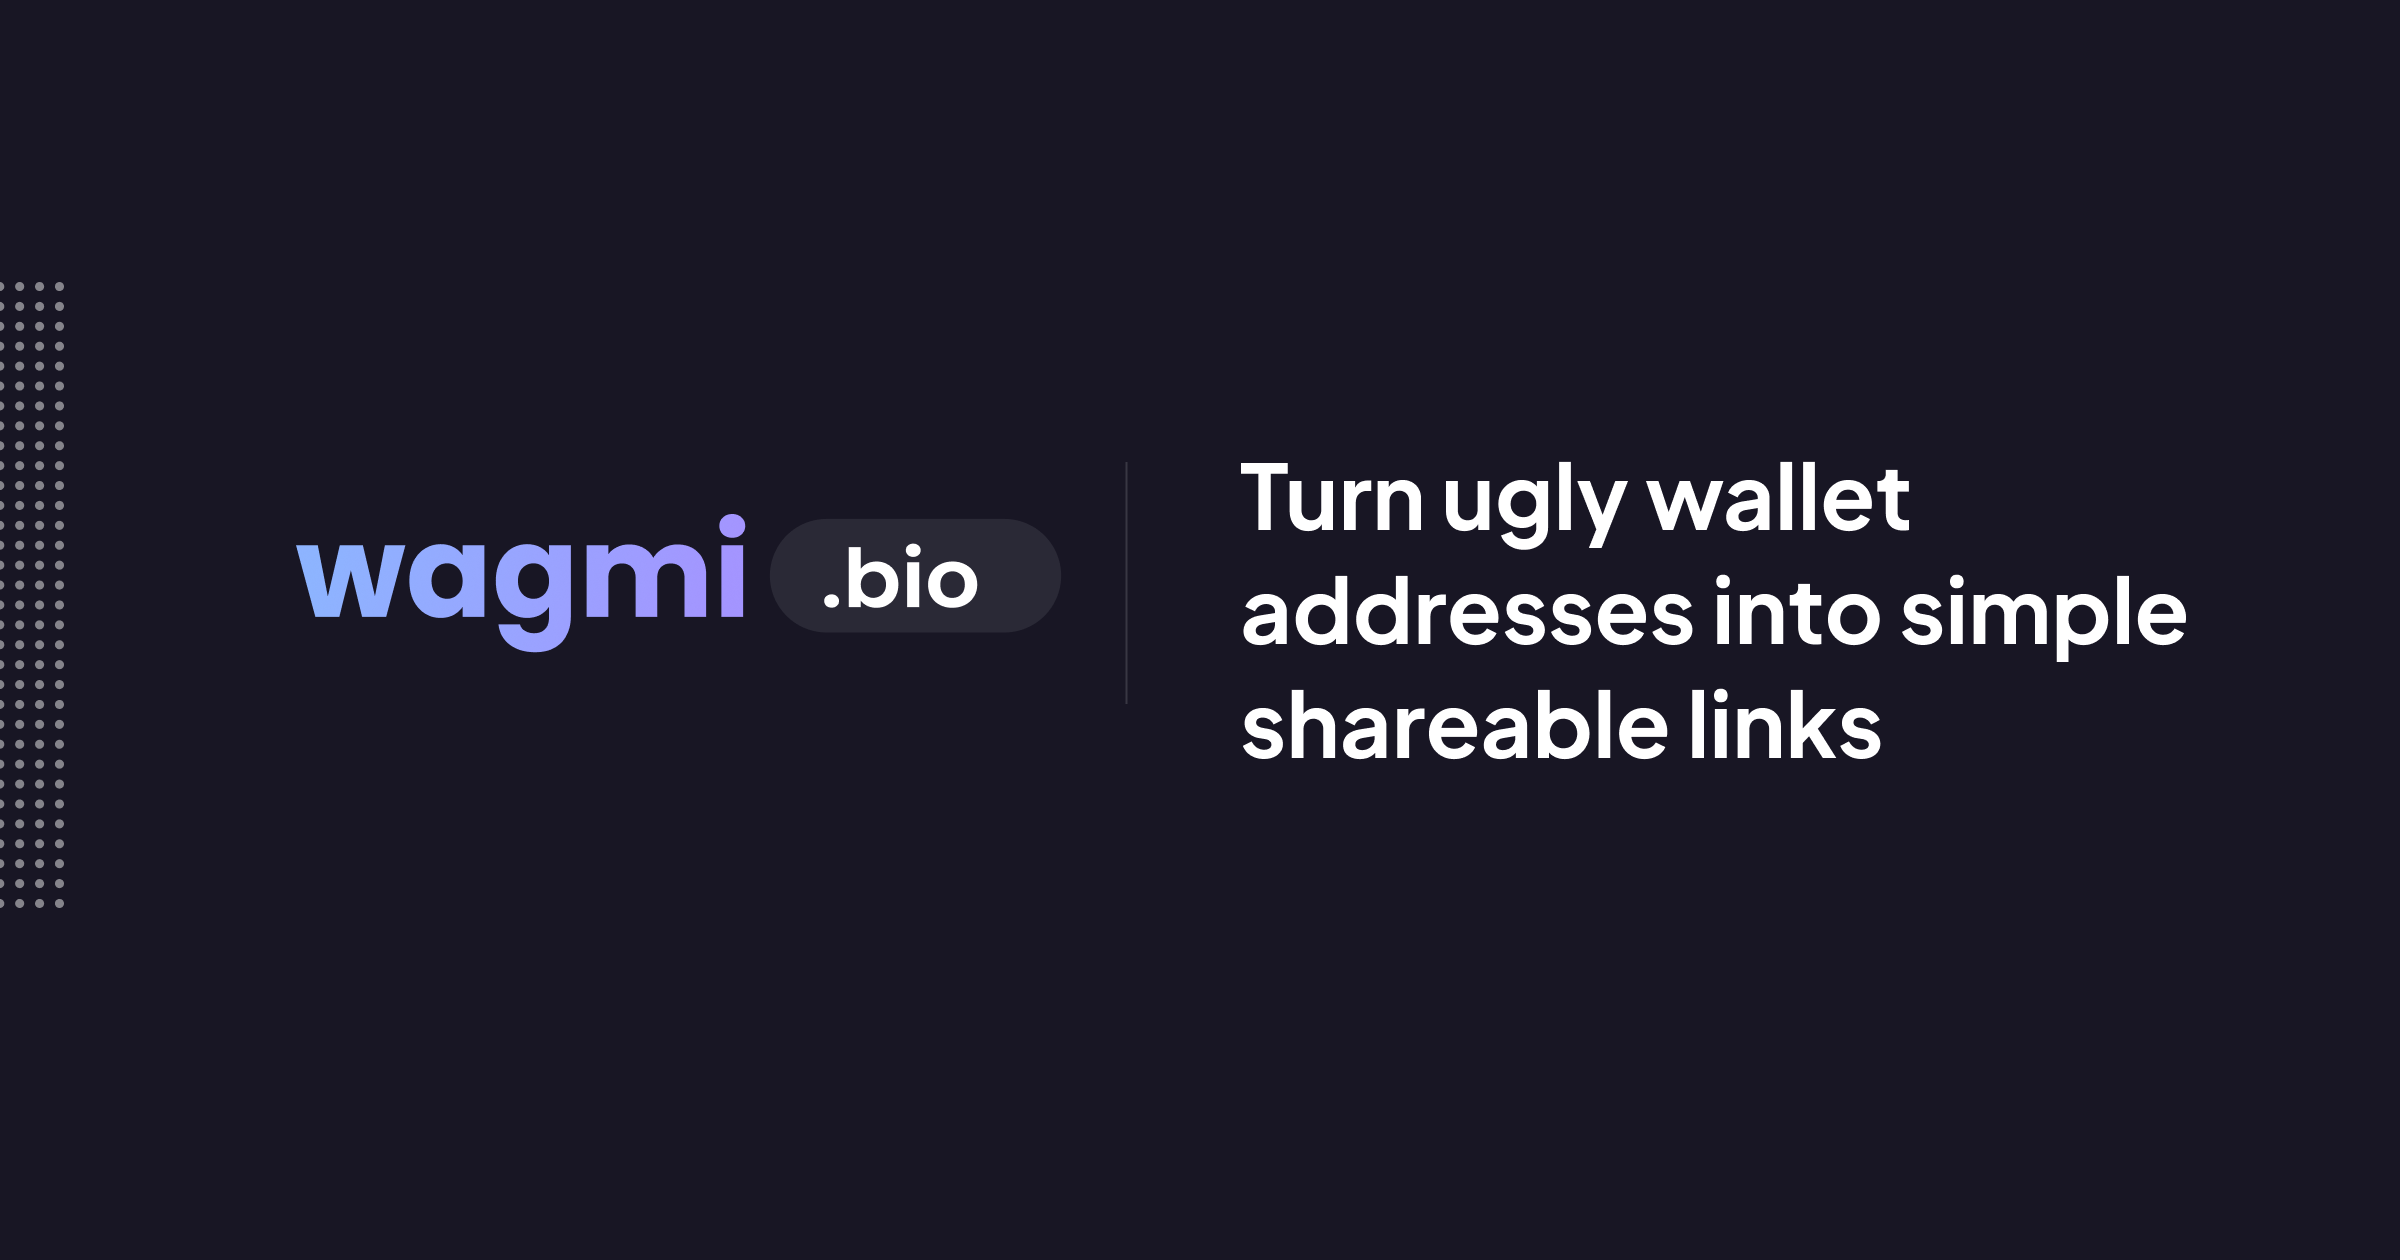 wagmi.bio - making web3 payments easier